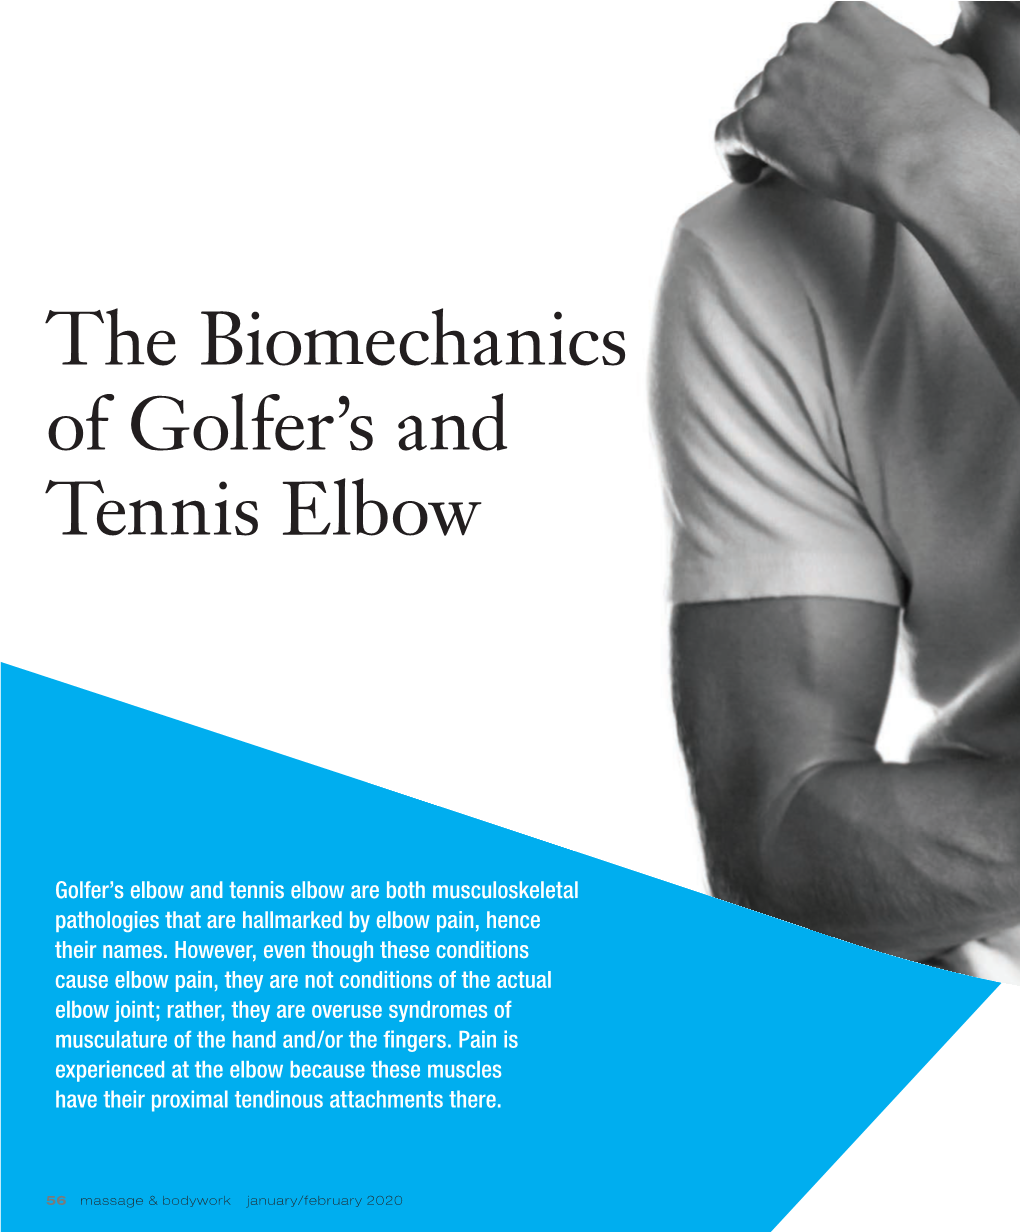 The Biomechanics of Golfer's and Tennis Elbow